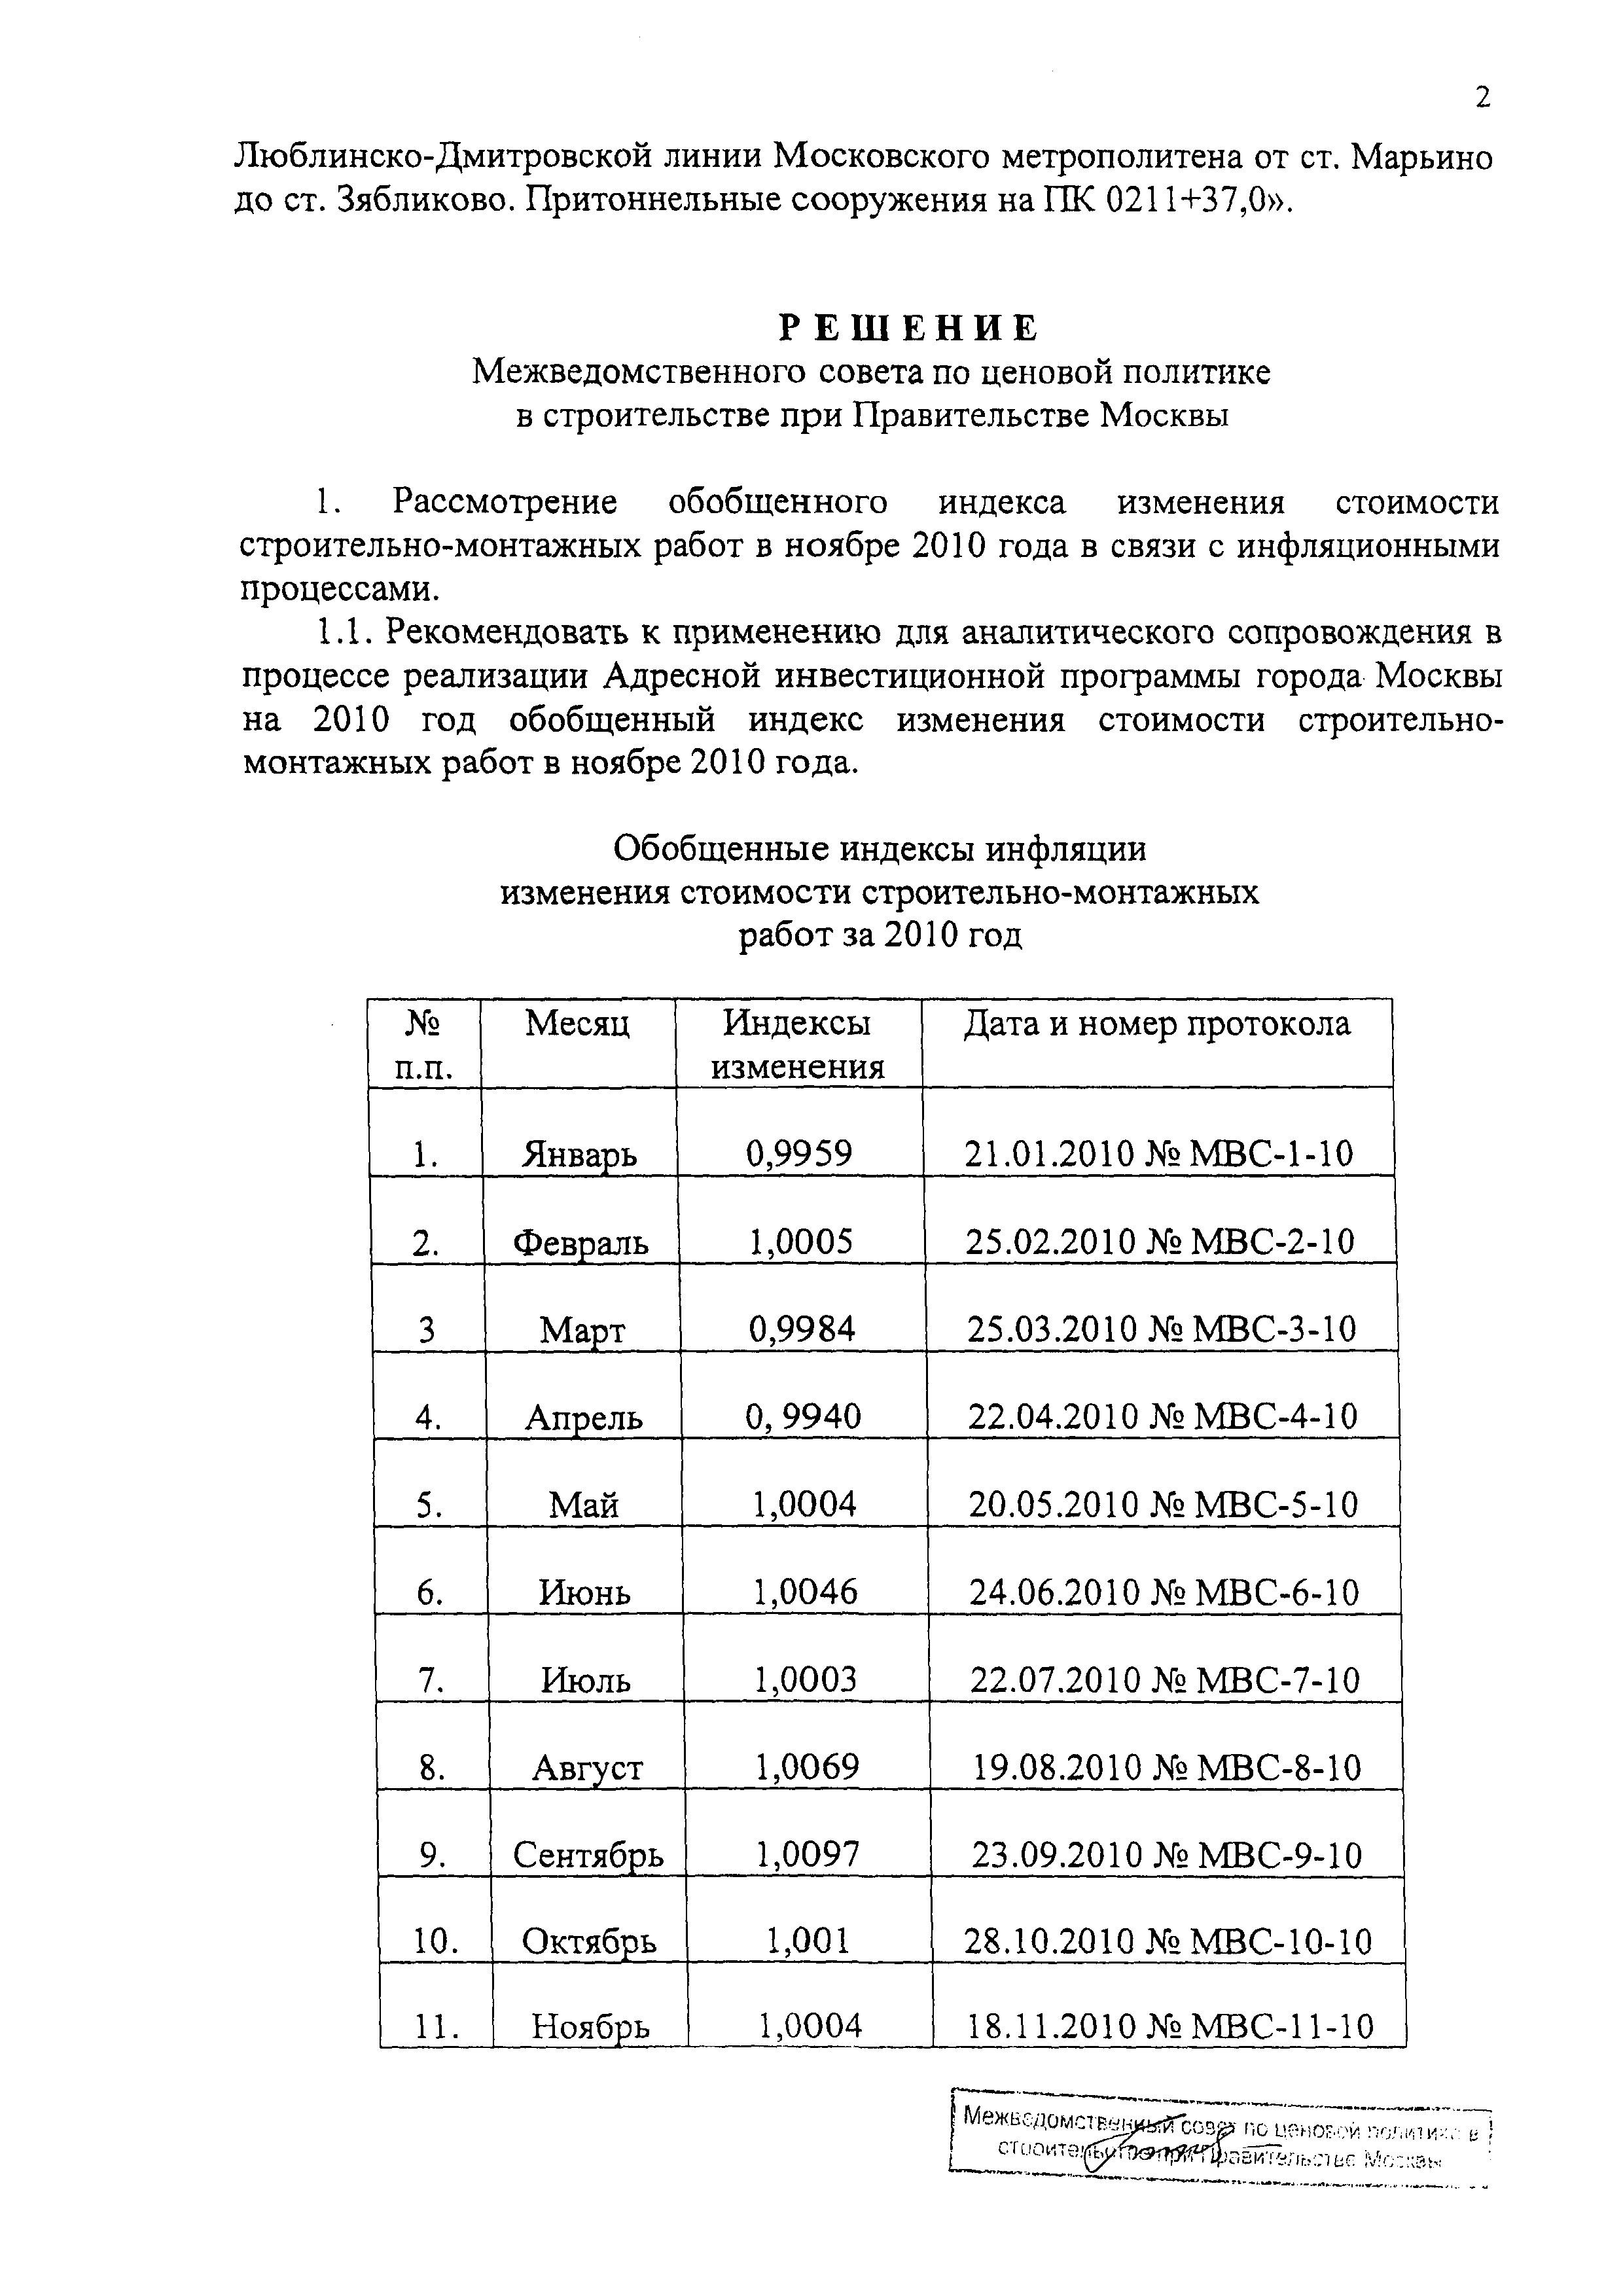 Протокол МВС-11-10